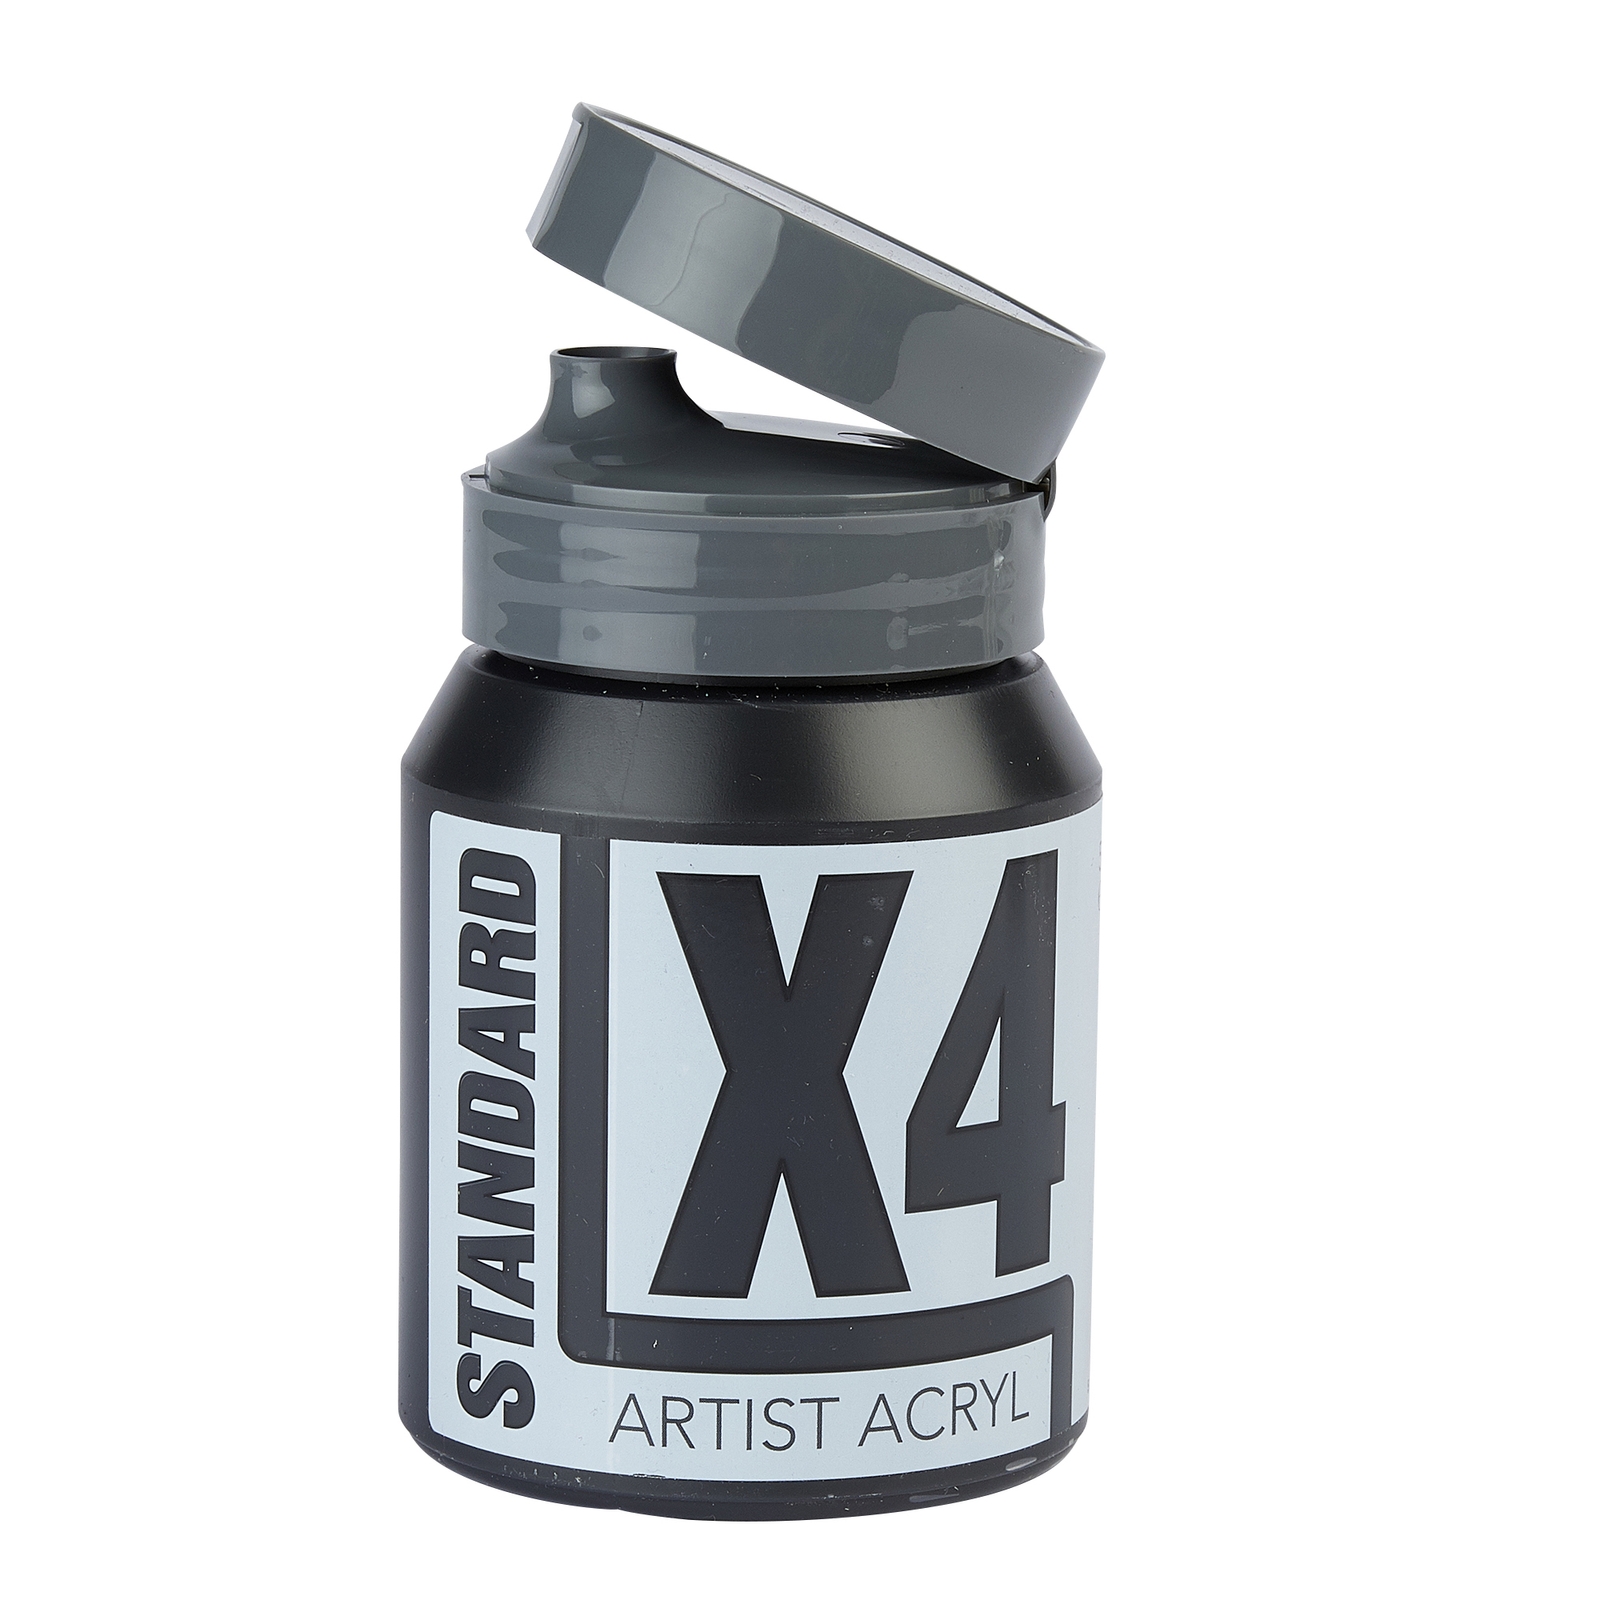 Specialist Crafts X4 Standard Ivory Black Acryl/Acrylic Paint - 500ml - Each